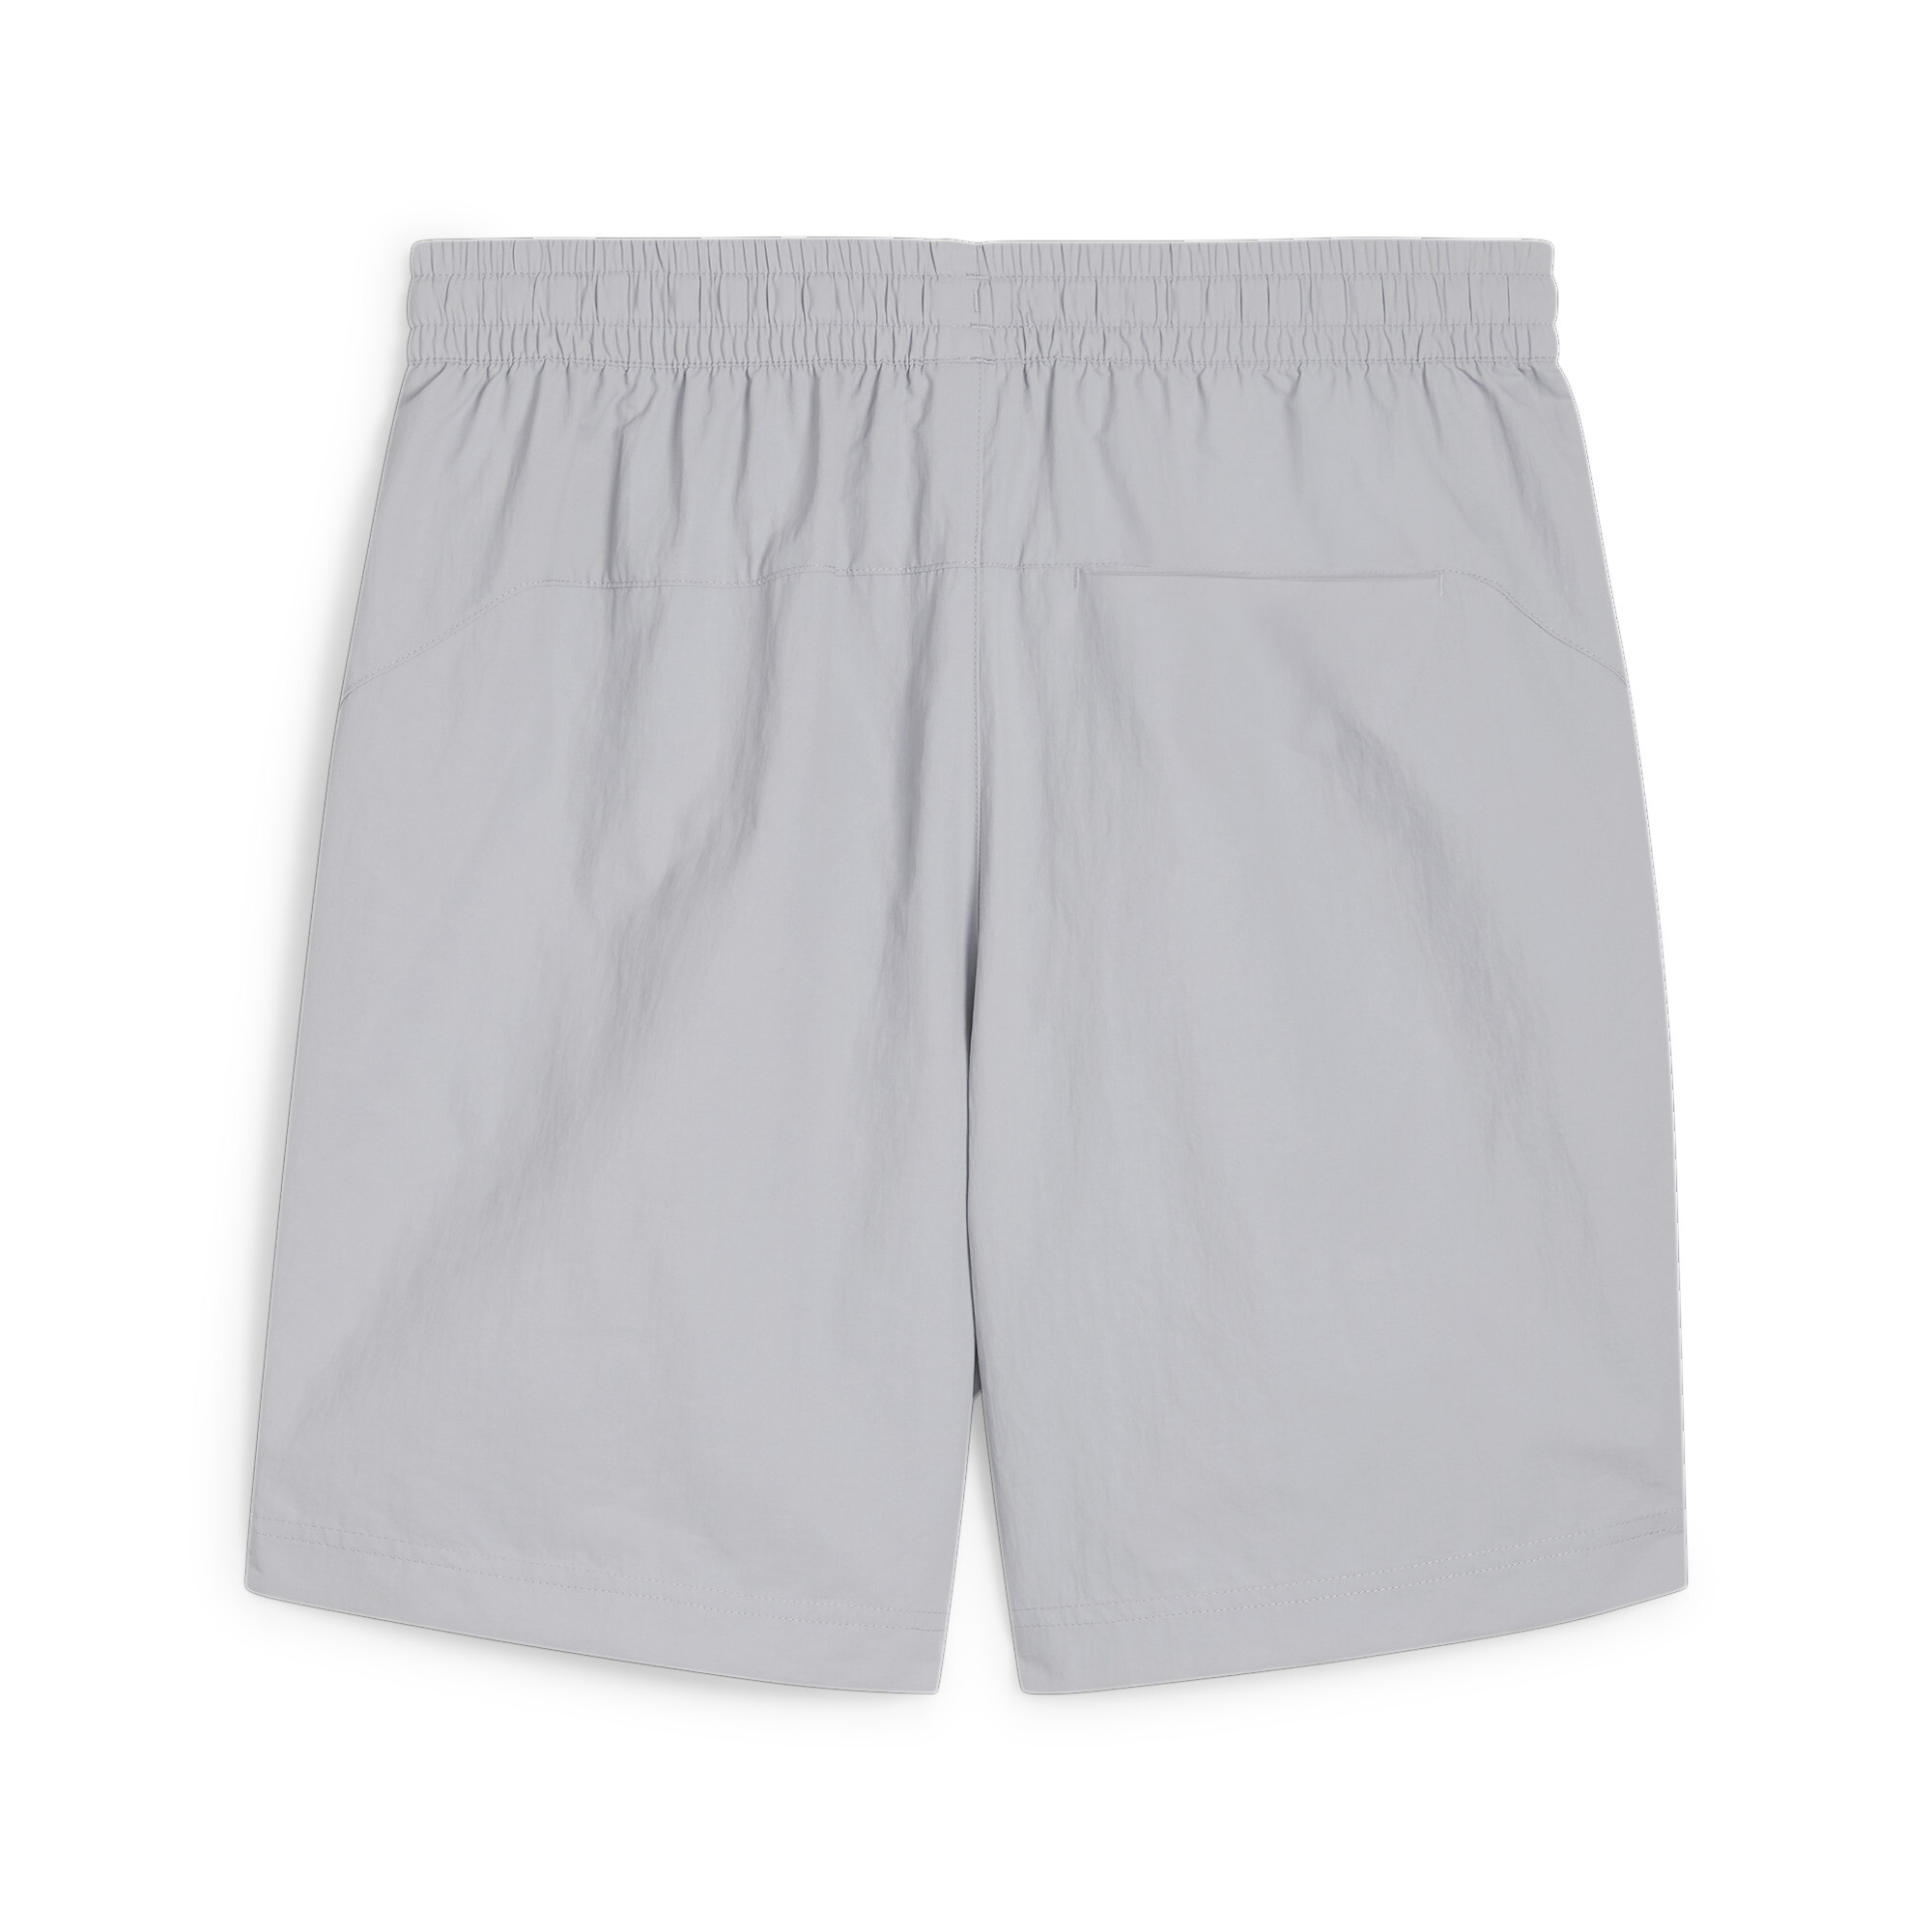 Men's Puma CLASSICS's Cargo Shorts, Gray, Size M, Clothing